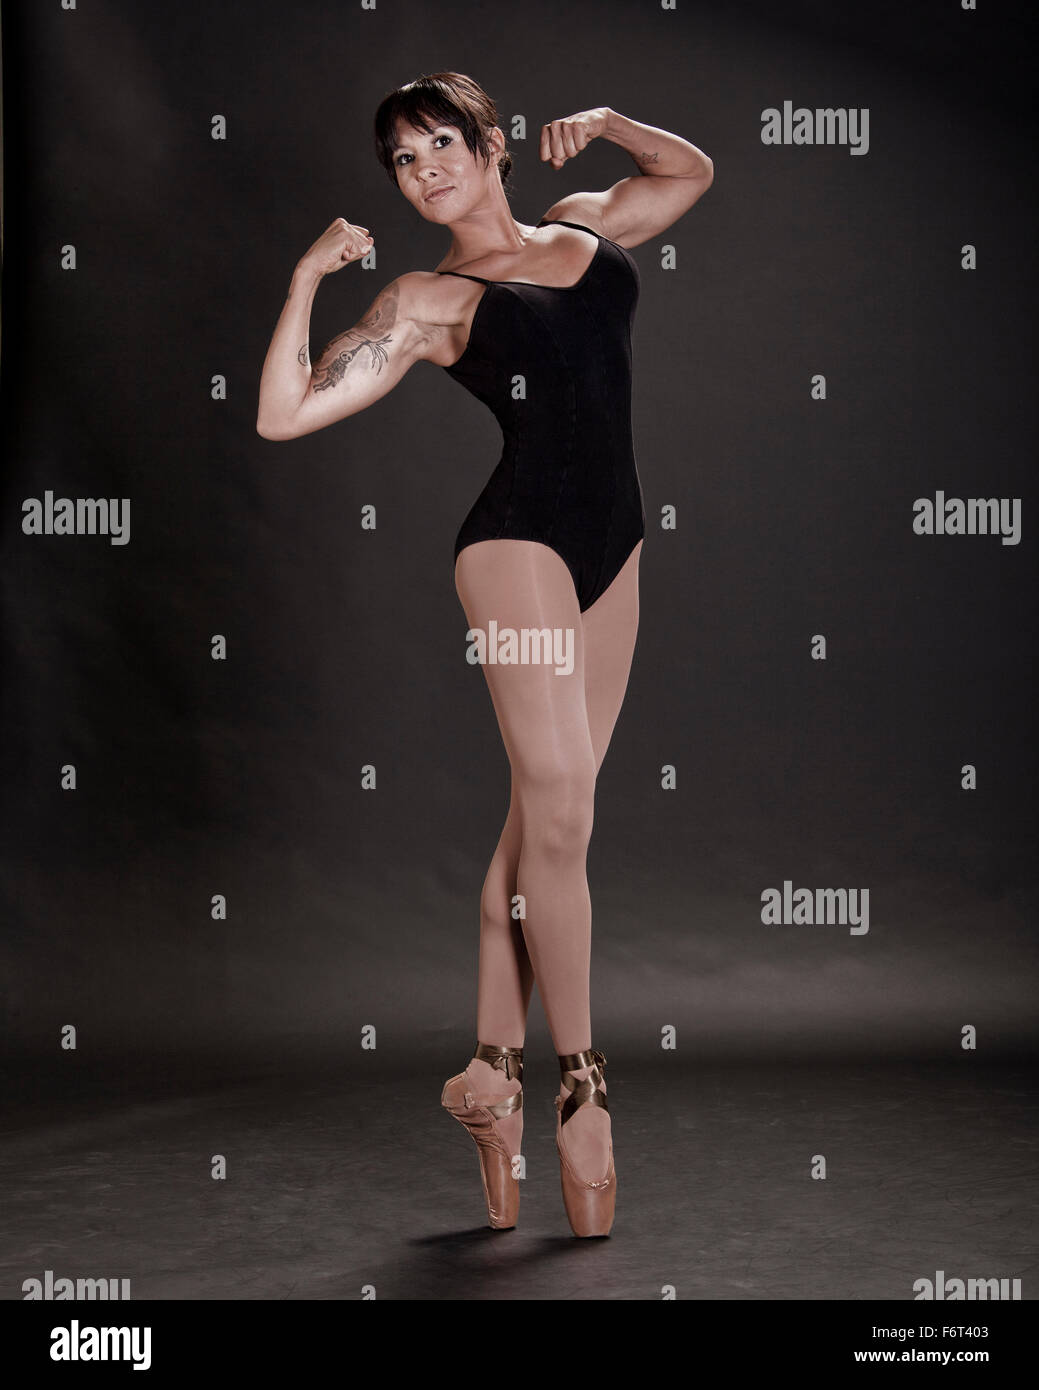 Hispanic ballet dancer flexing muscles Stock Photo